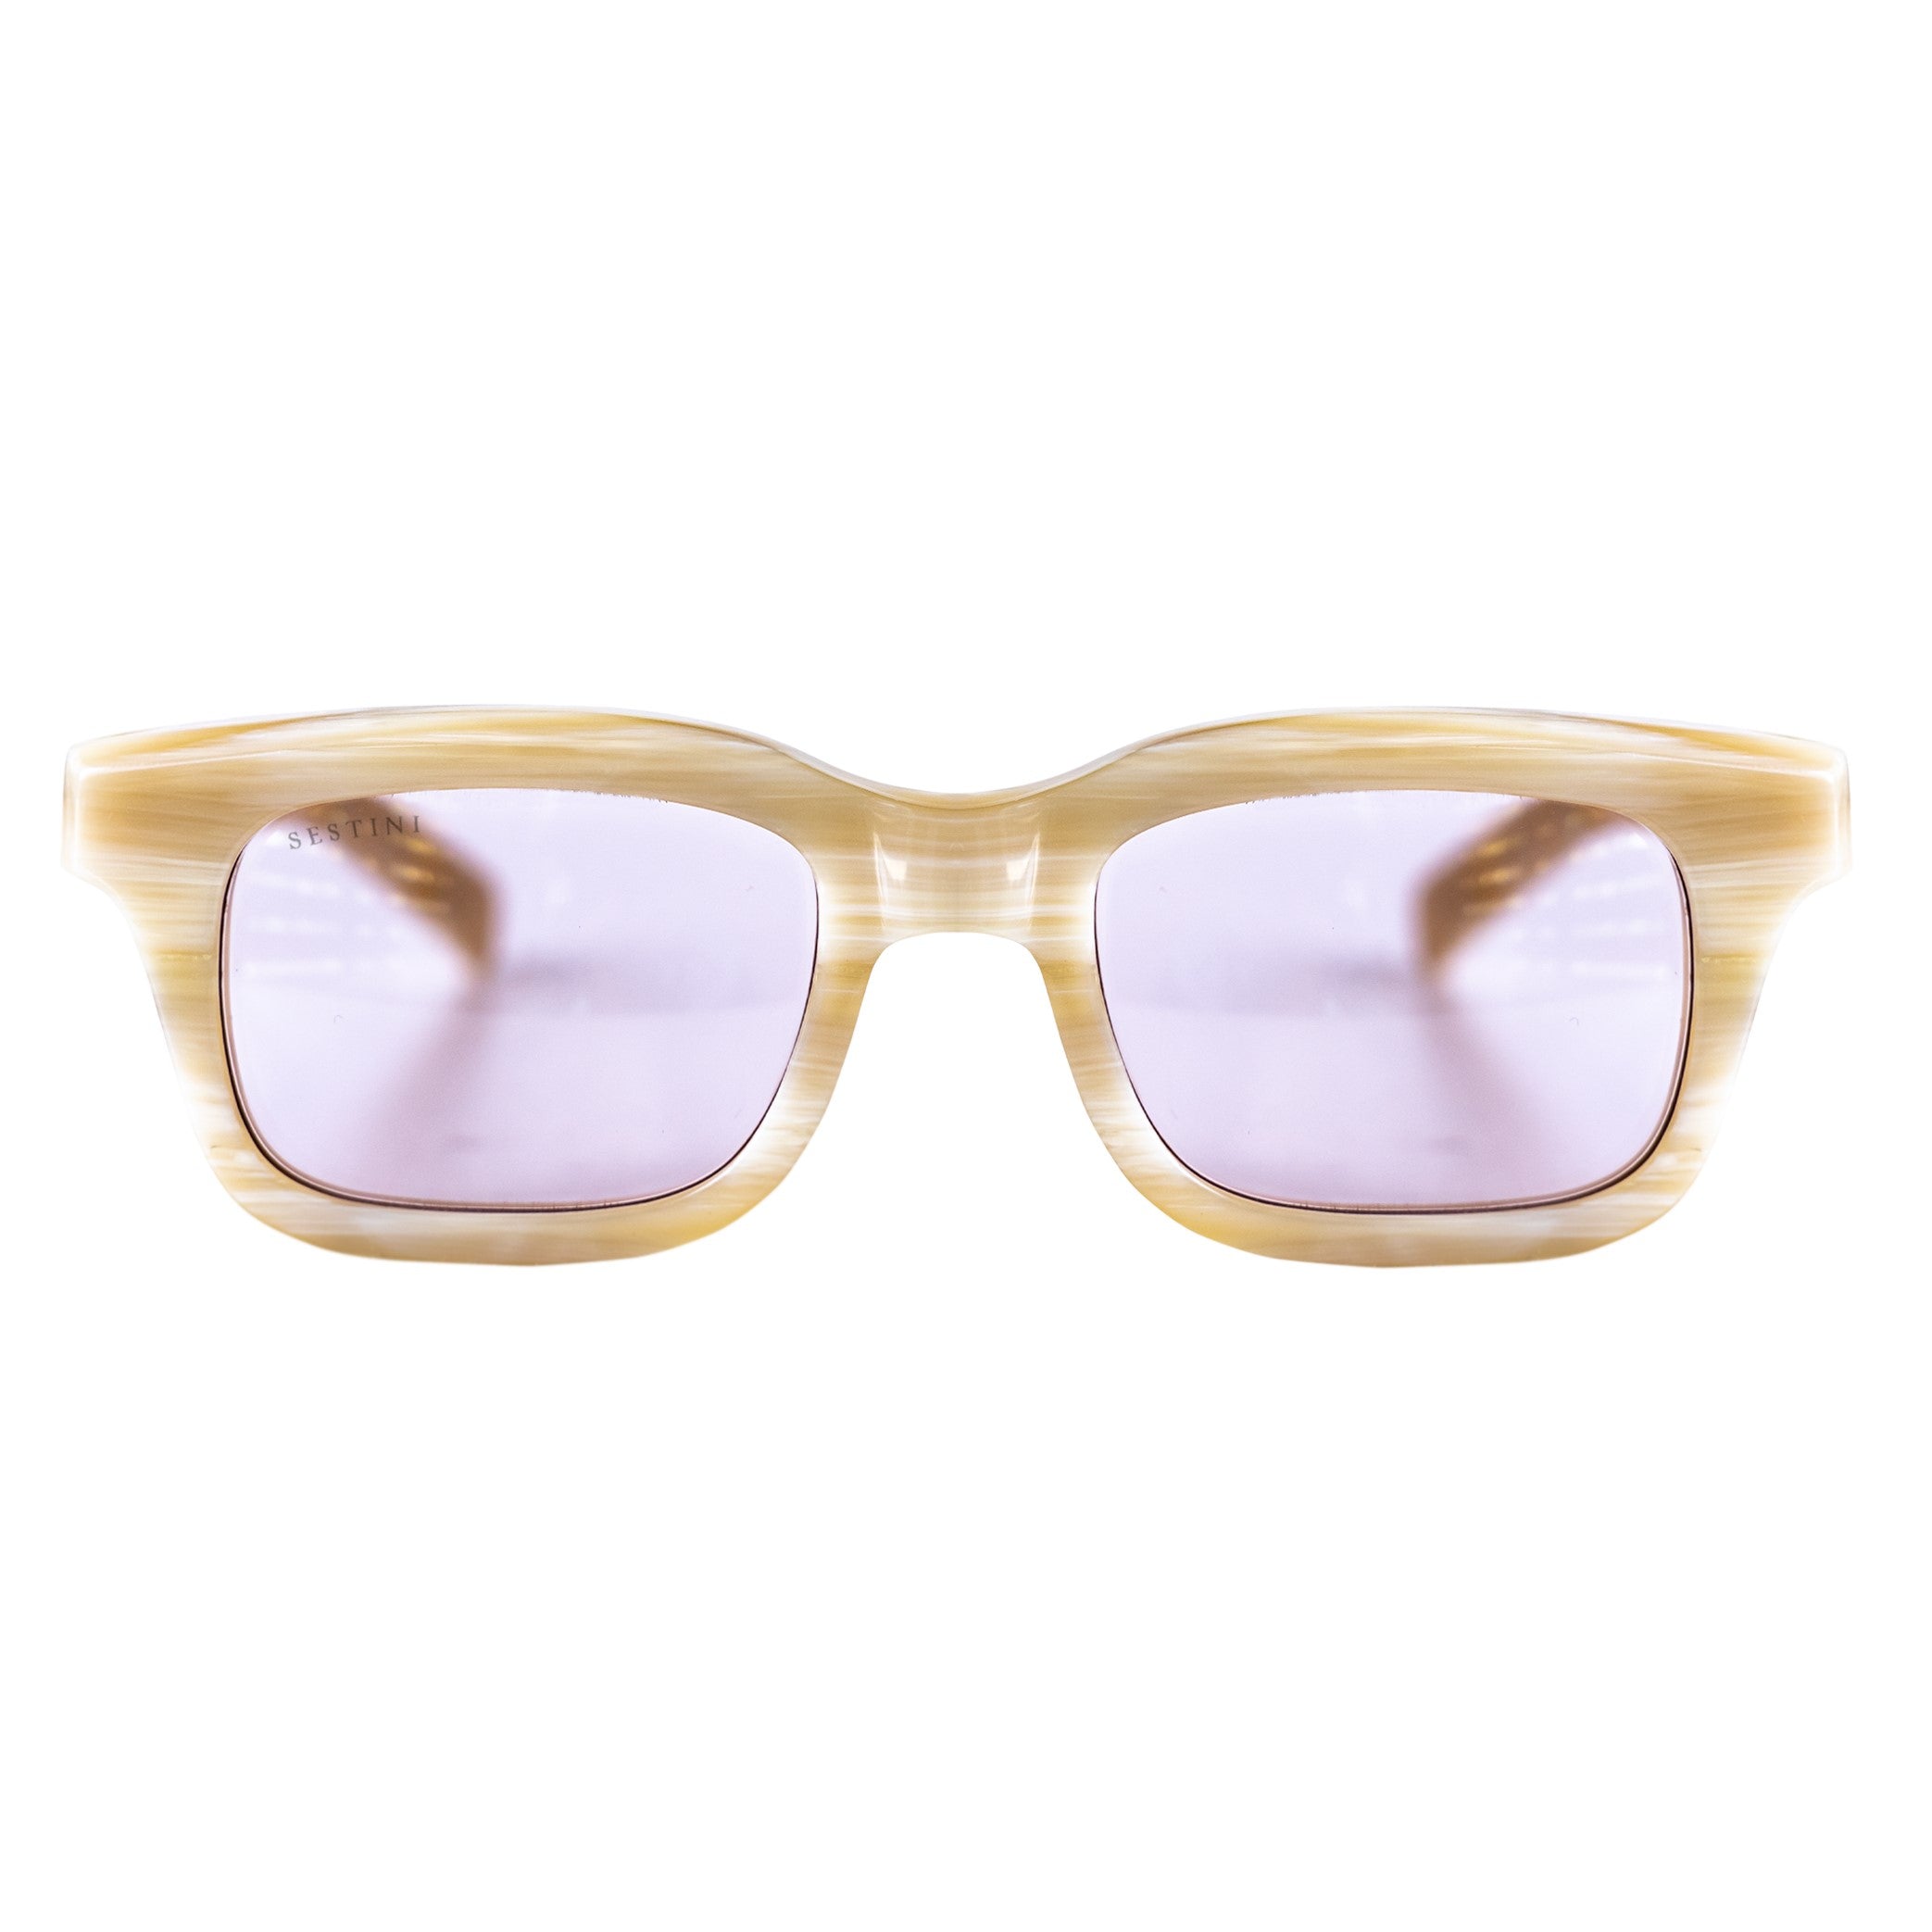 Sestini for Eden Rock St Barths Quattro Sunglasses - Oetker Collection Hotels Boutique